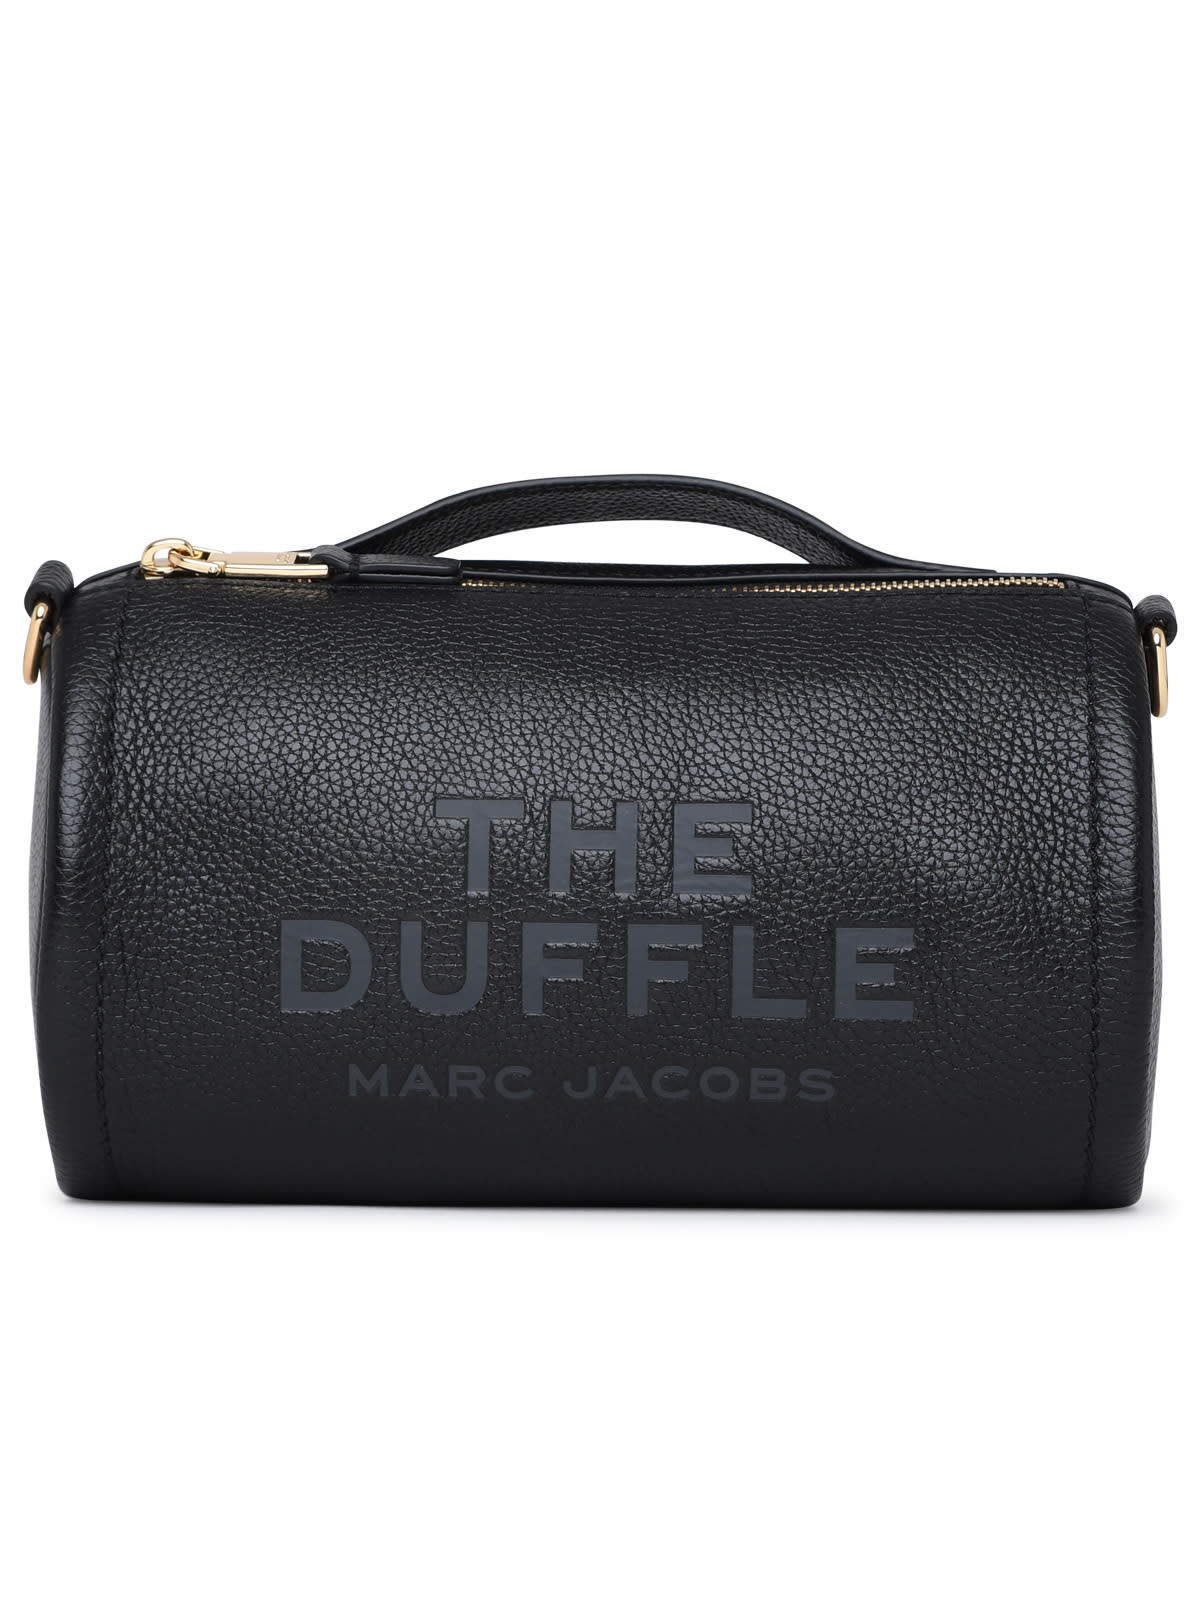 Marc Jacobs Black Leather Duffle Bag